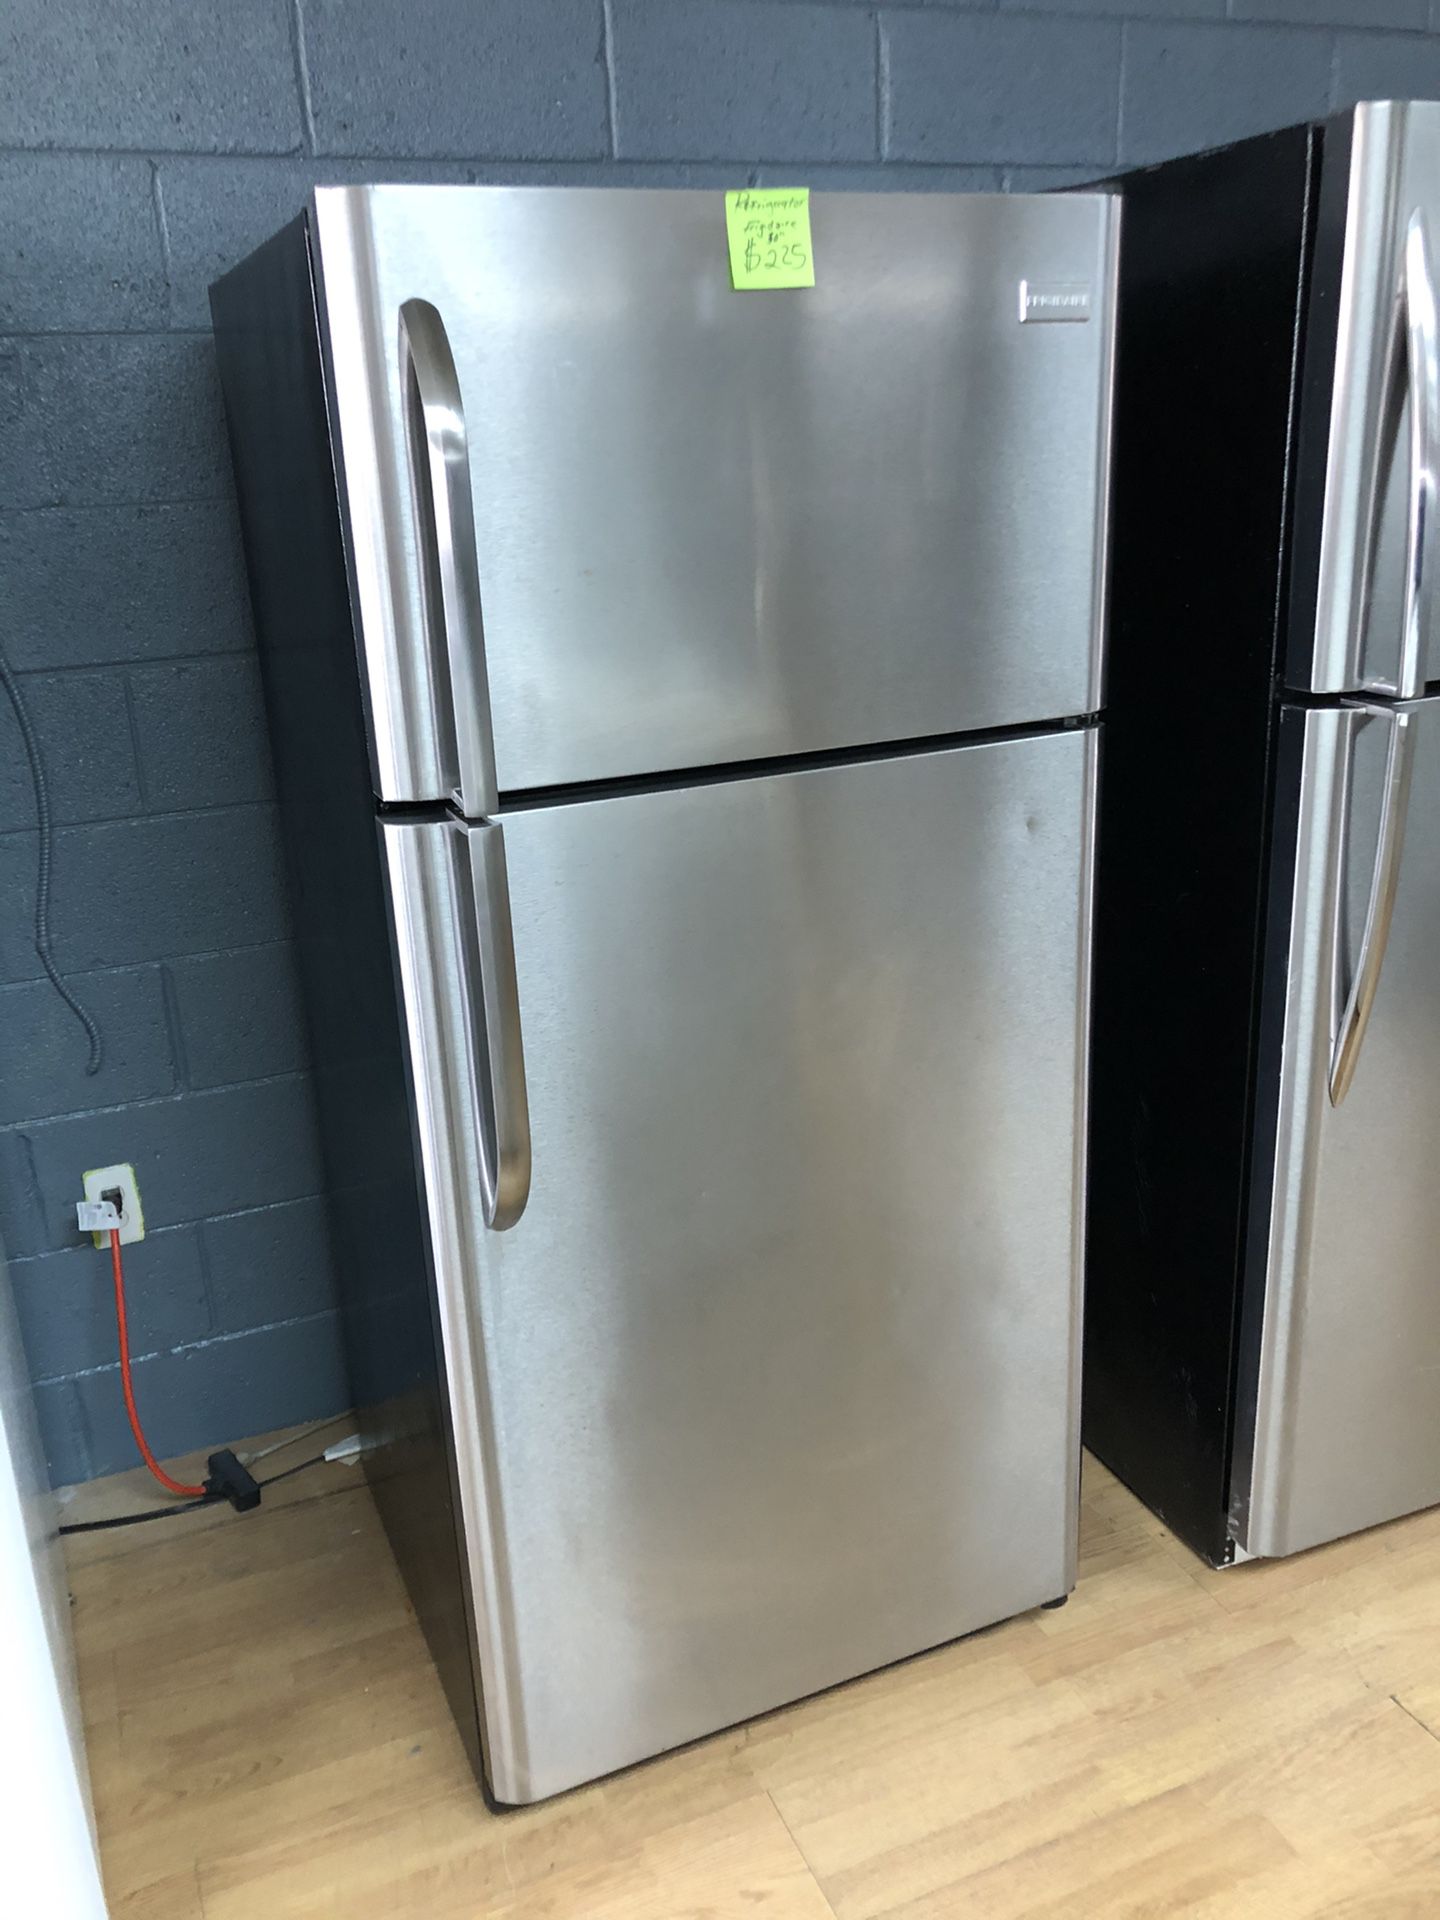 Frigidaire stainless steel top freezer refrigerator